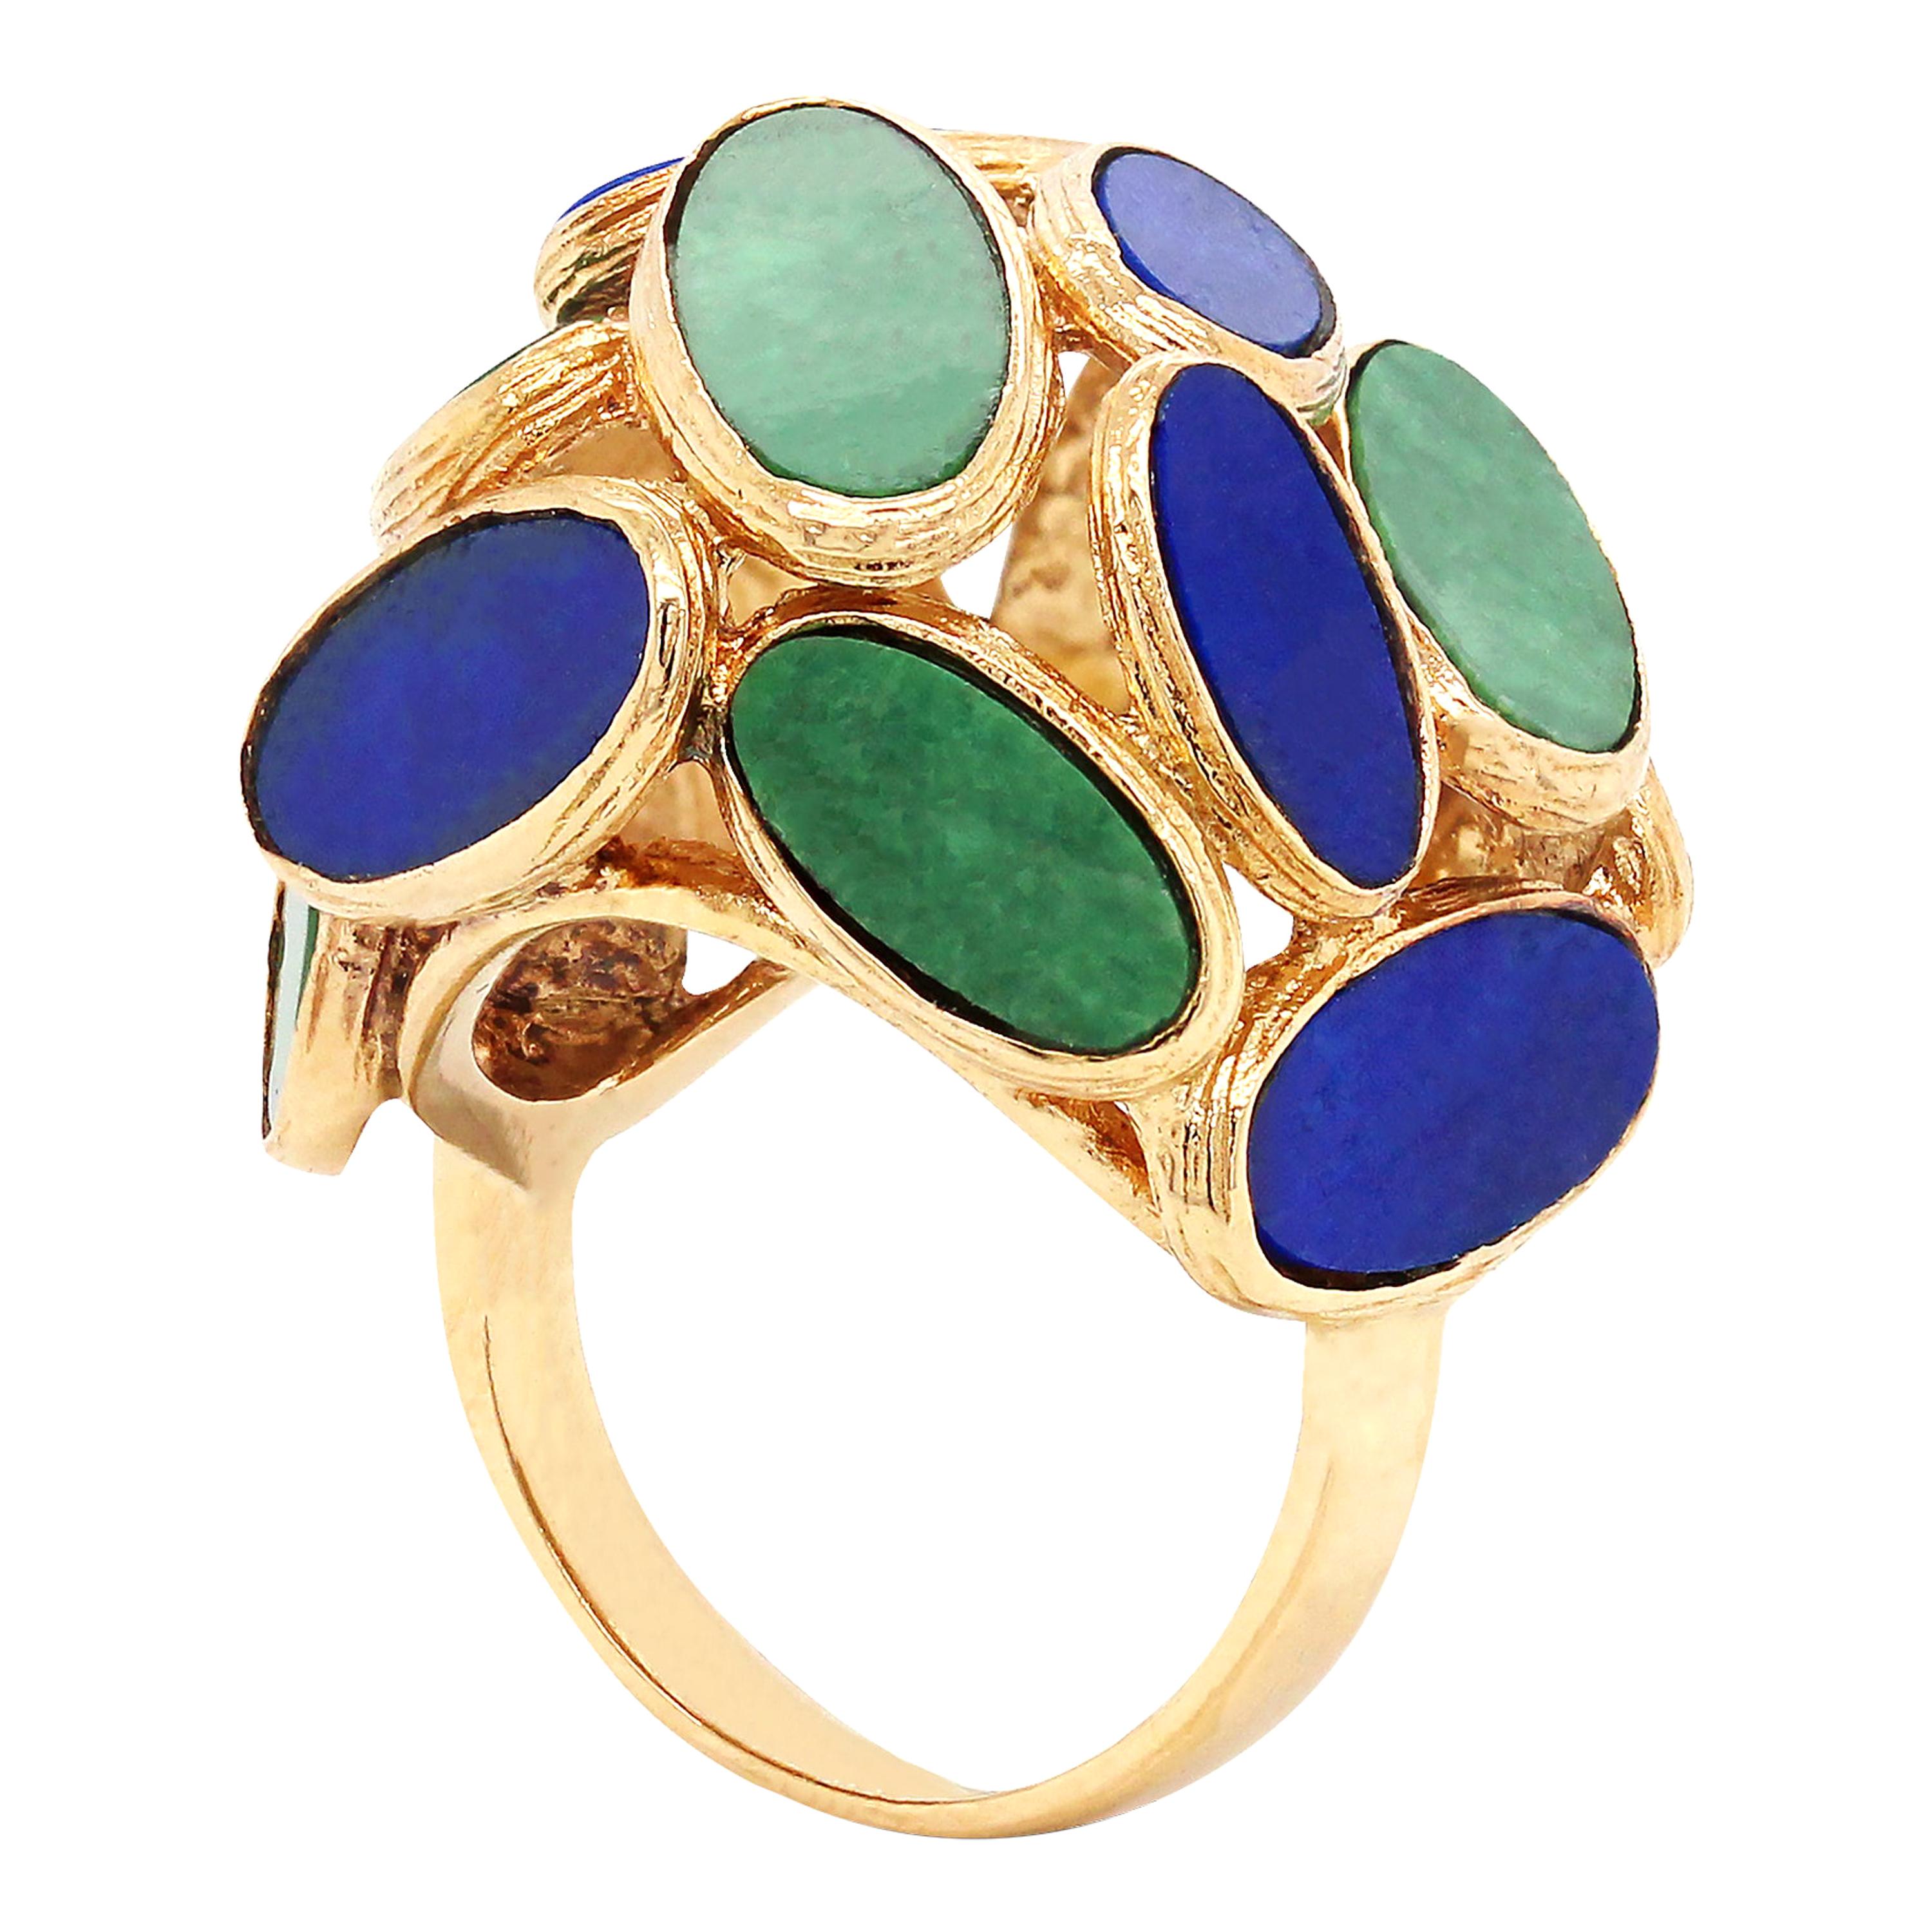 18 Karat Yellow Gold Ring with Jade and Lapis Lazuli